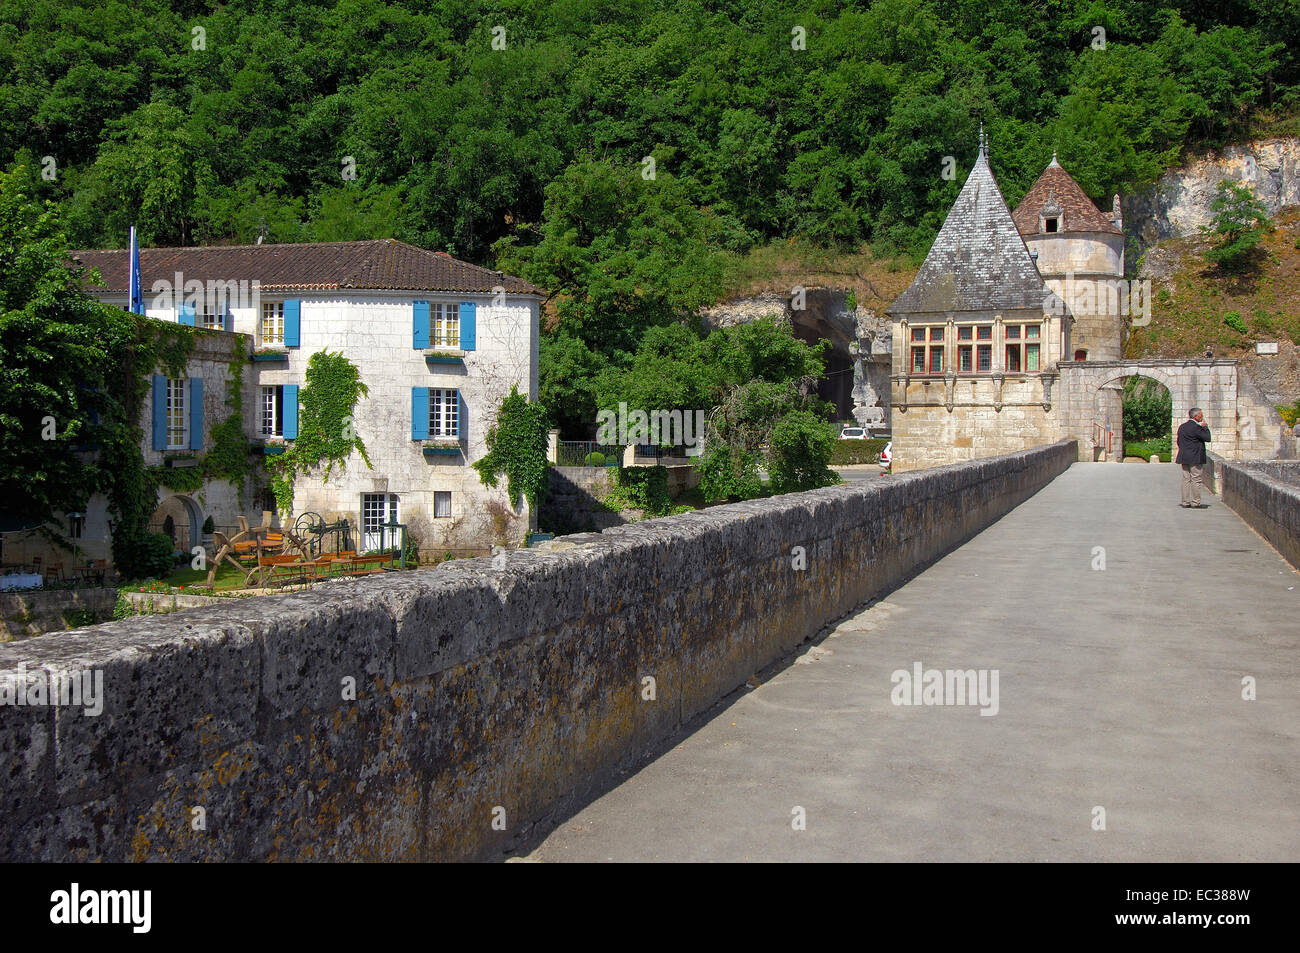 Brantome, Moulin de L'Abbaye Hotel, Dordogne, Perigord, Dronne, France, Europe Banque D'Images